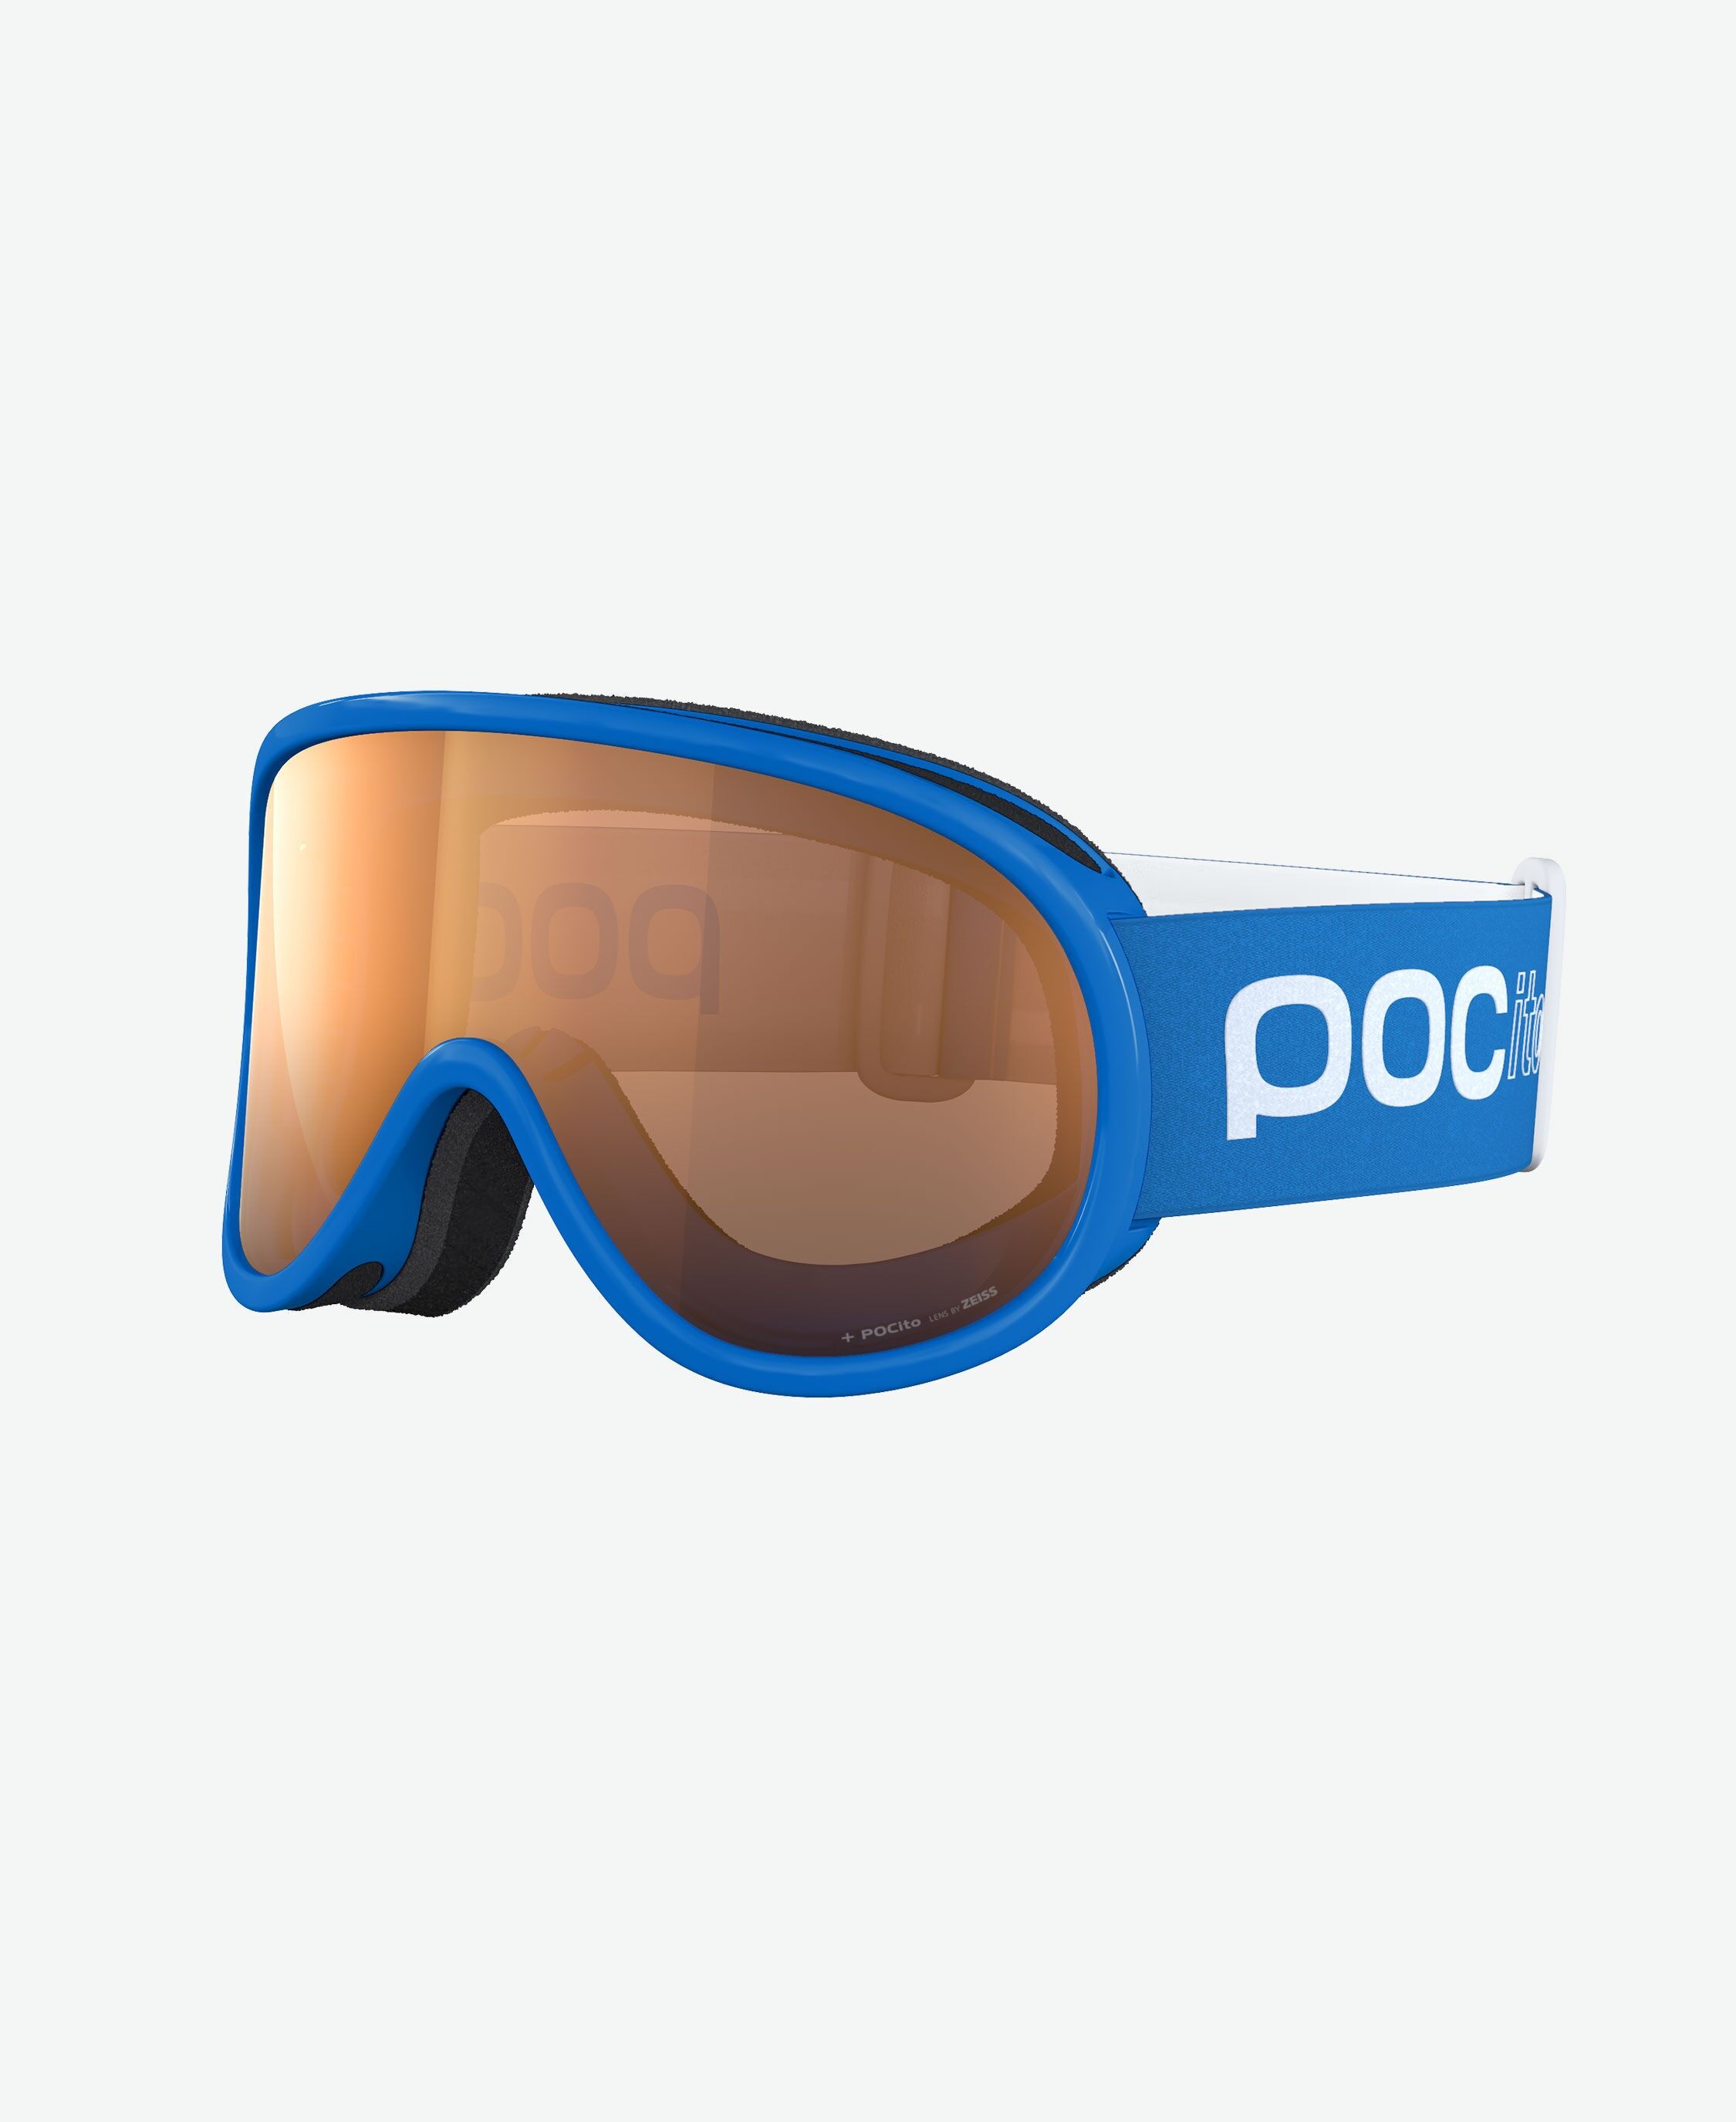 Poc Pocito Retina  - Ski goggles - Kids